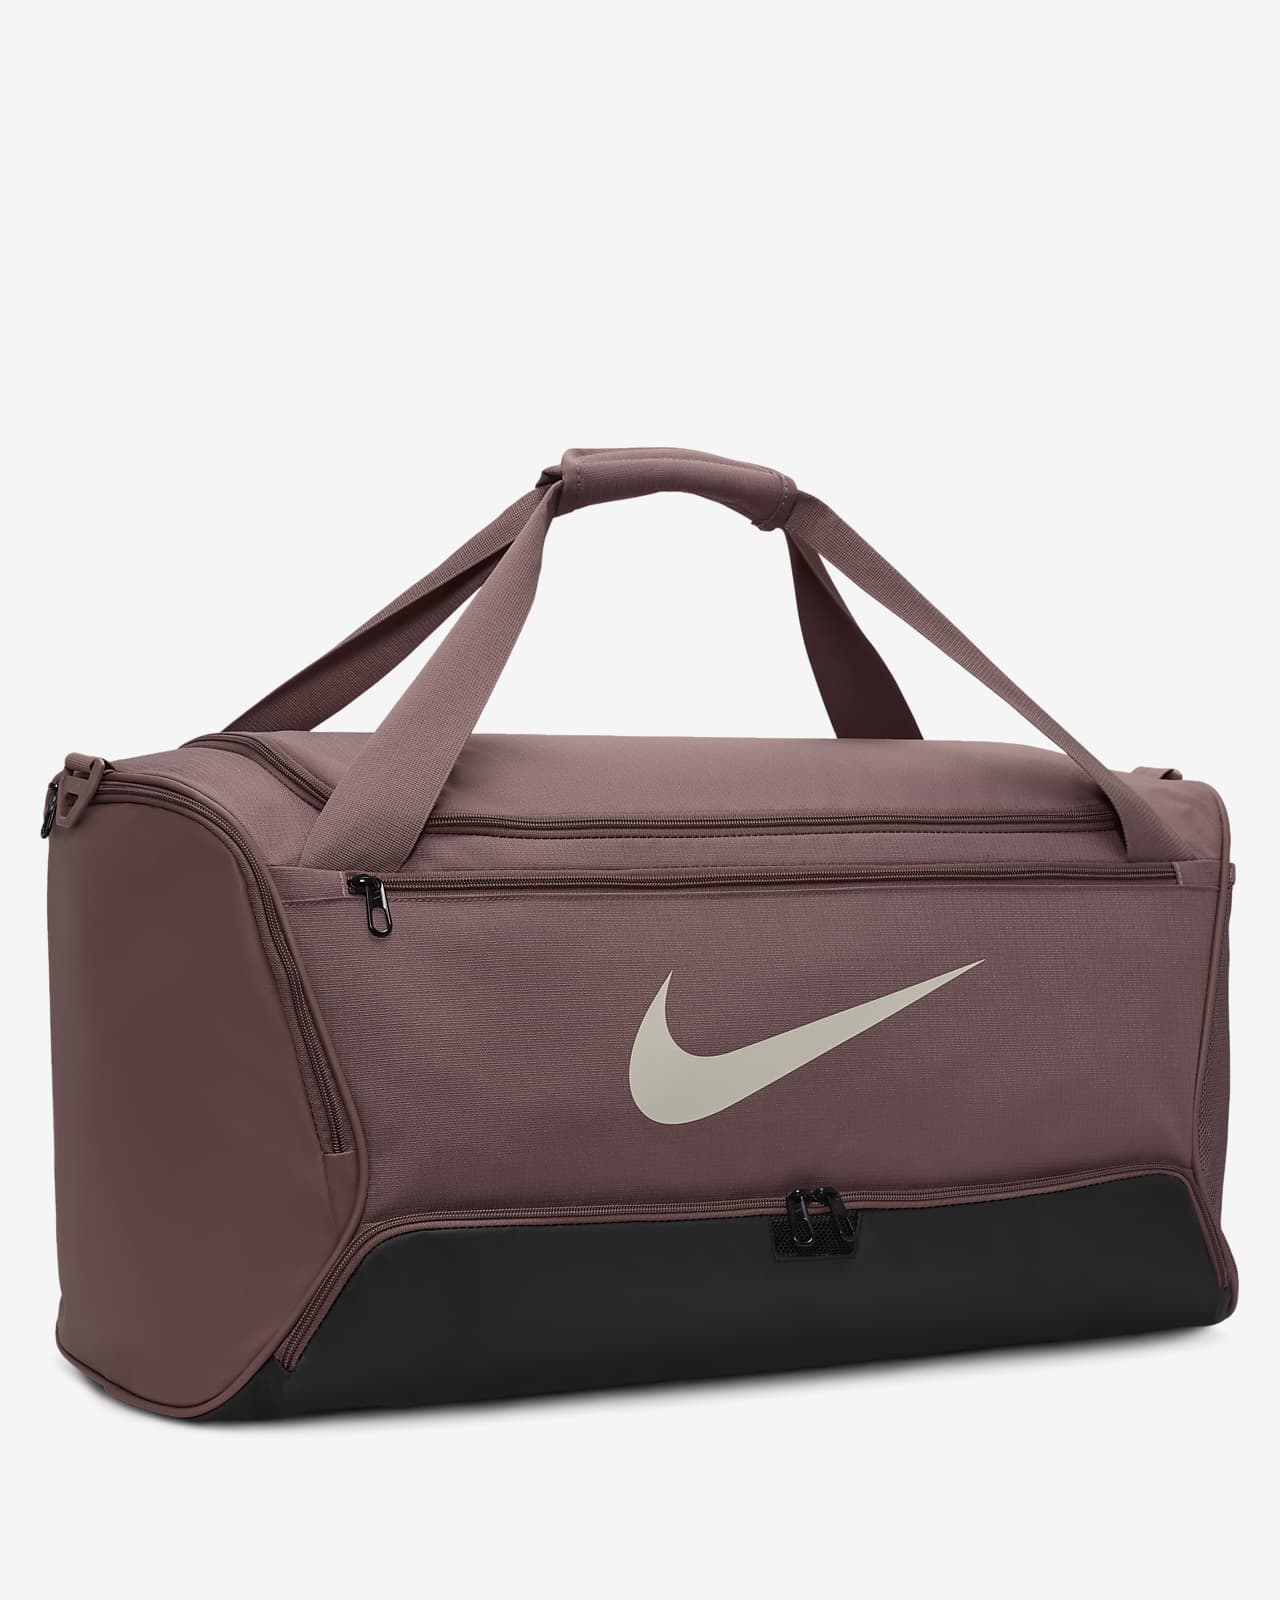 Nike Brasilia 6 Medium Duffel Bag